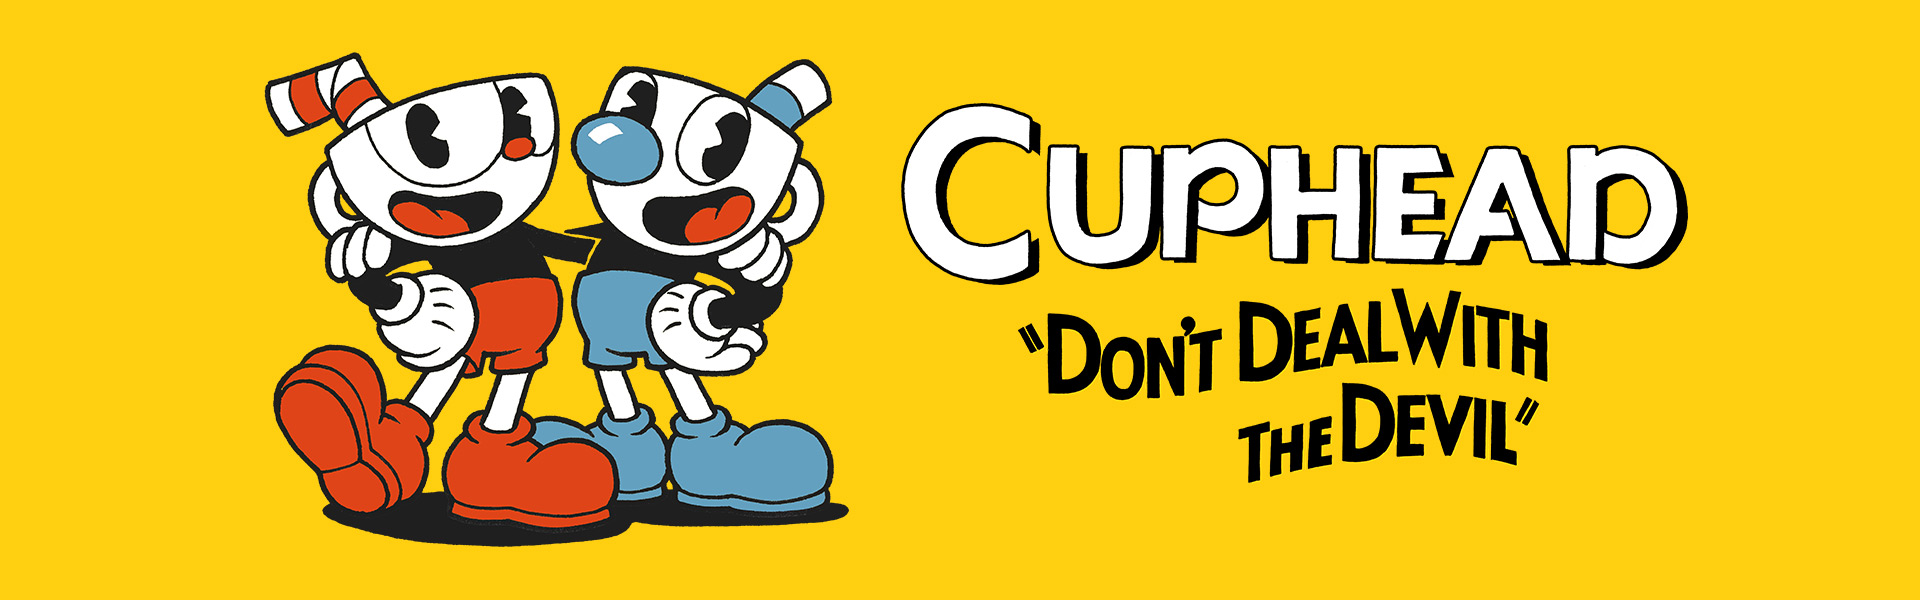 cuphead online co op mod